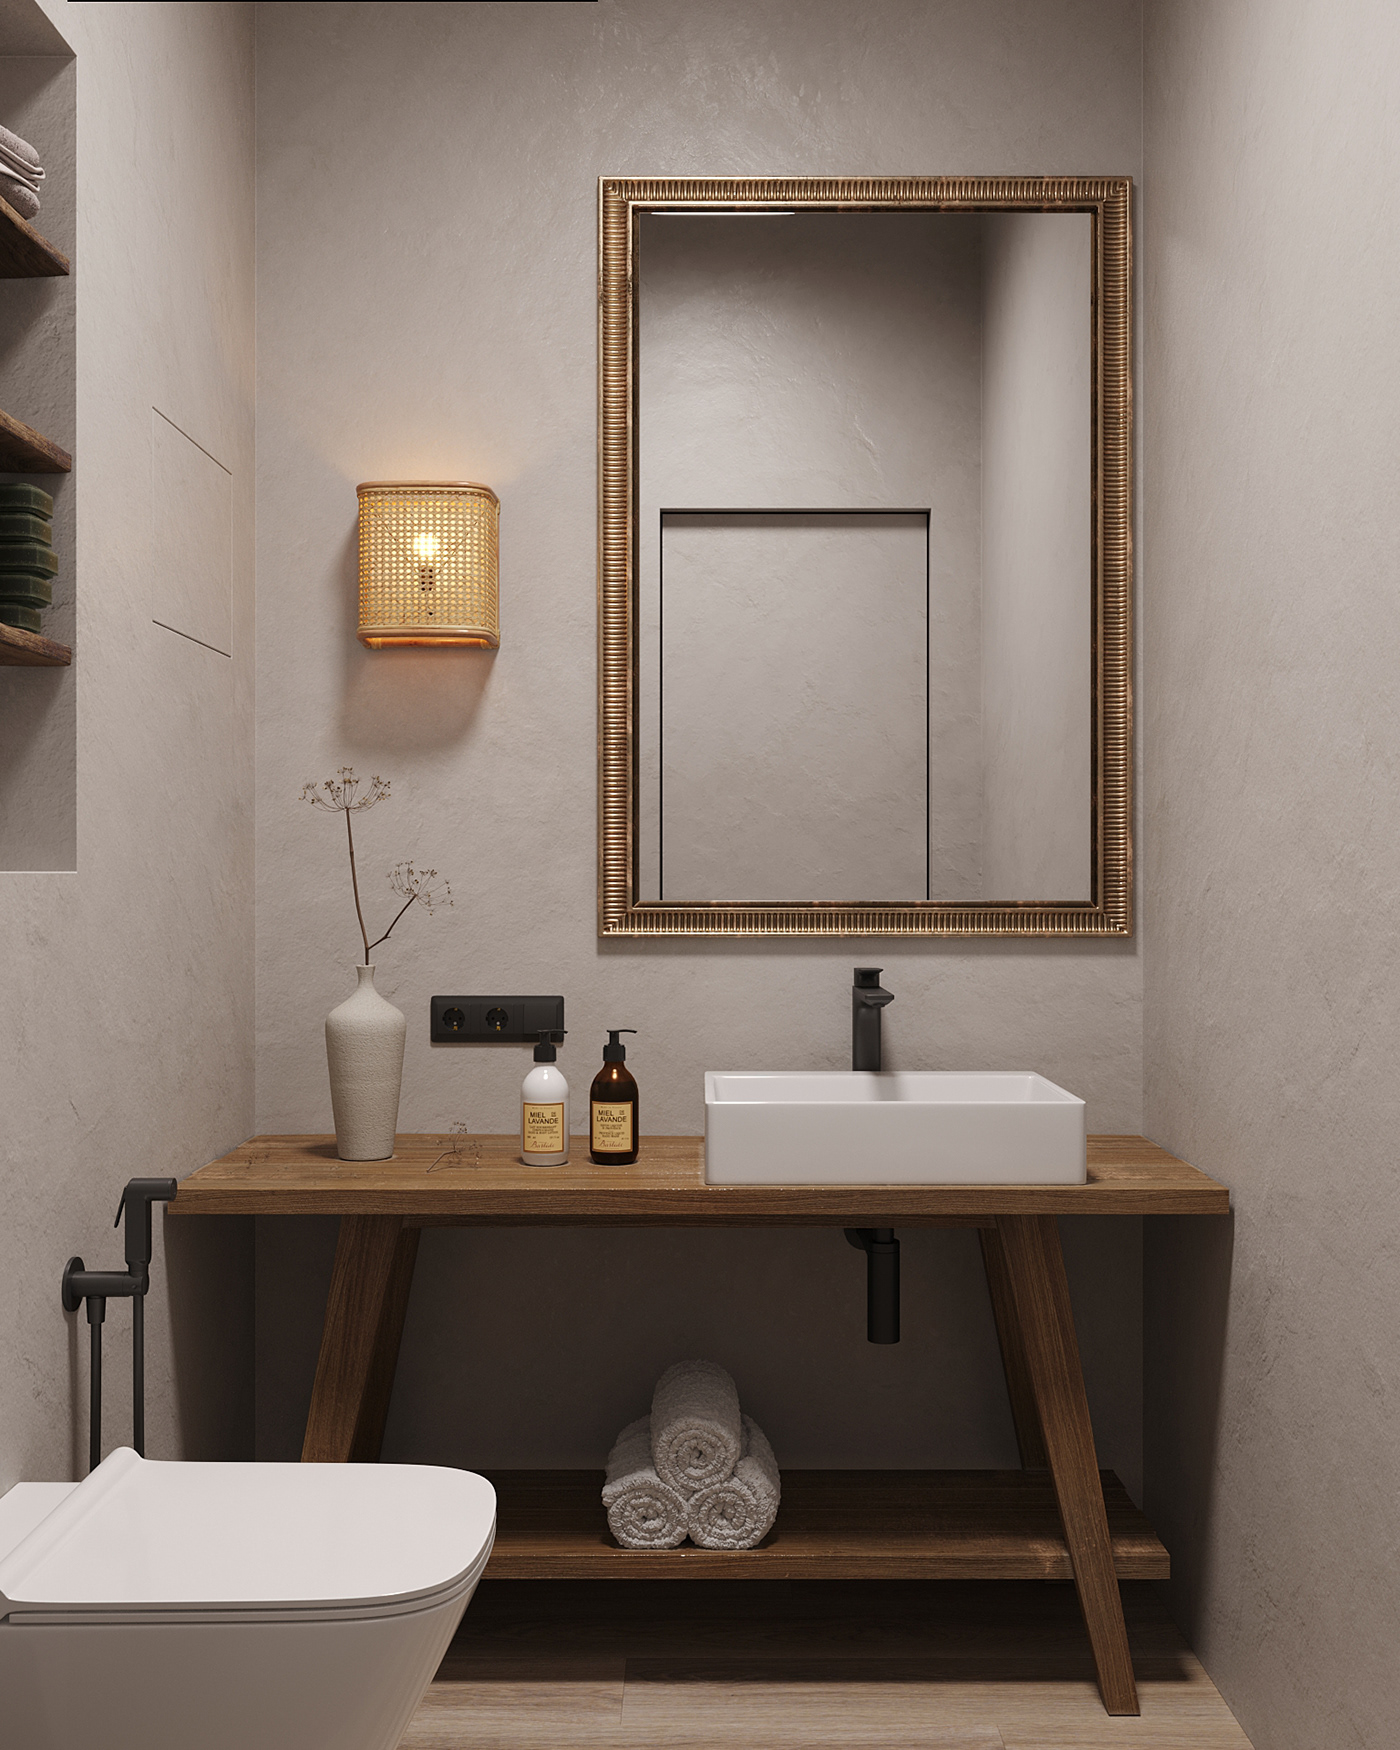 3ds max 3dvisualization bathroom bathroom design bedroom bedroom design Interior interiordesign Render visualization